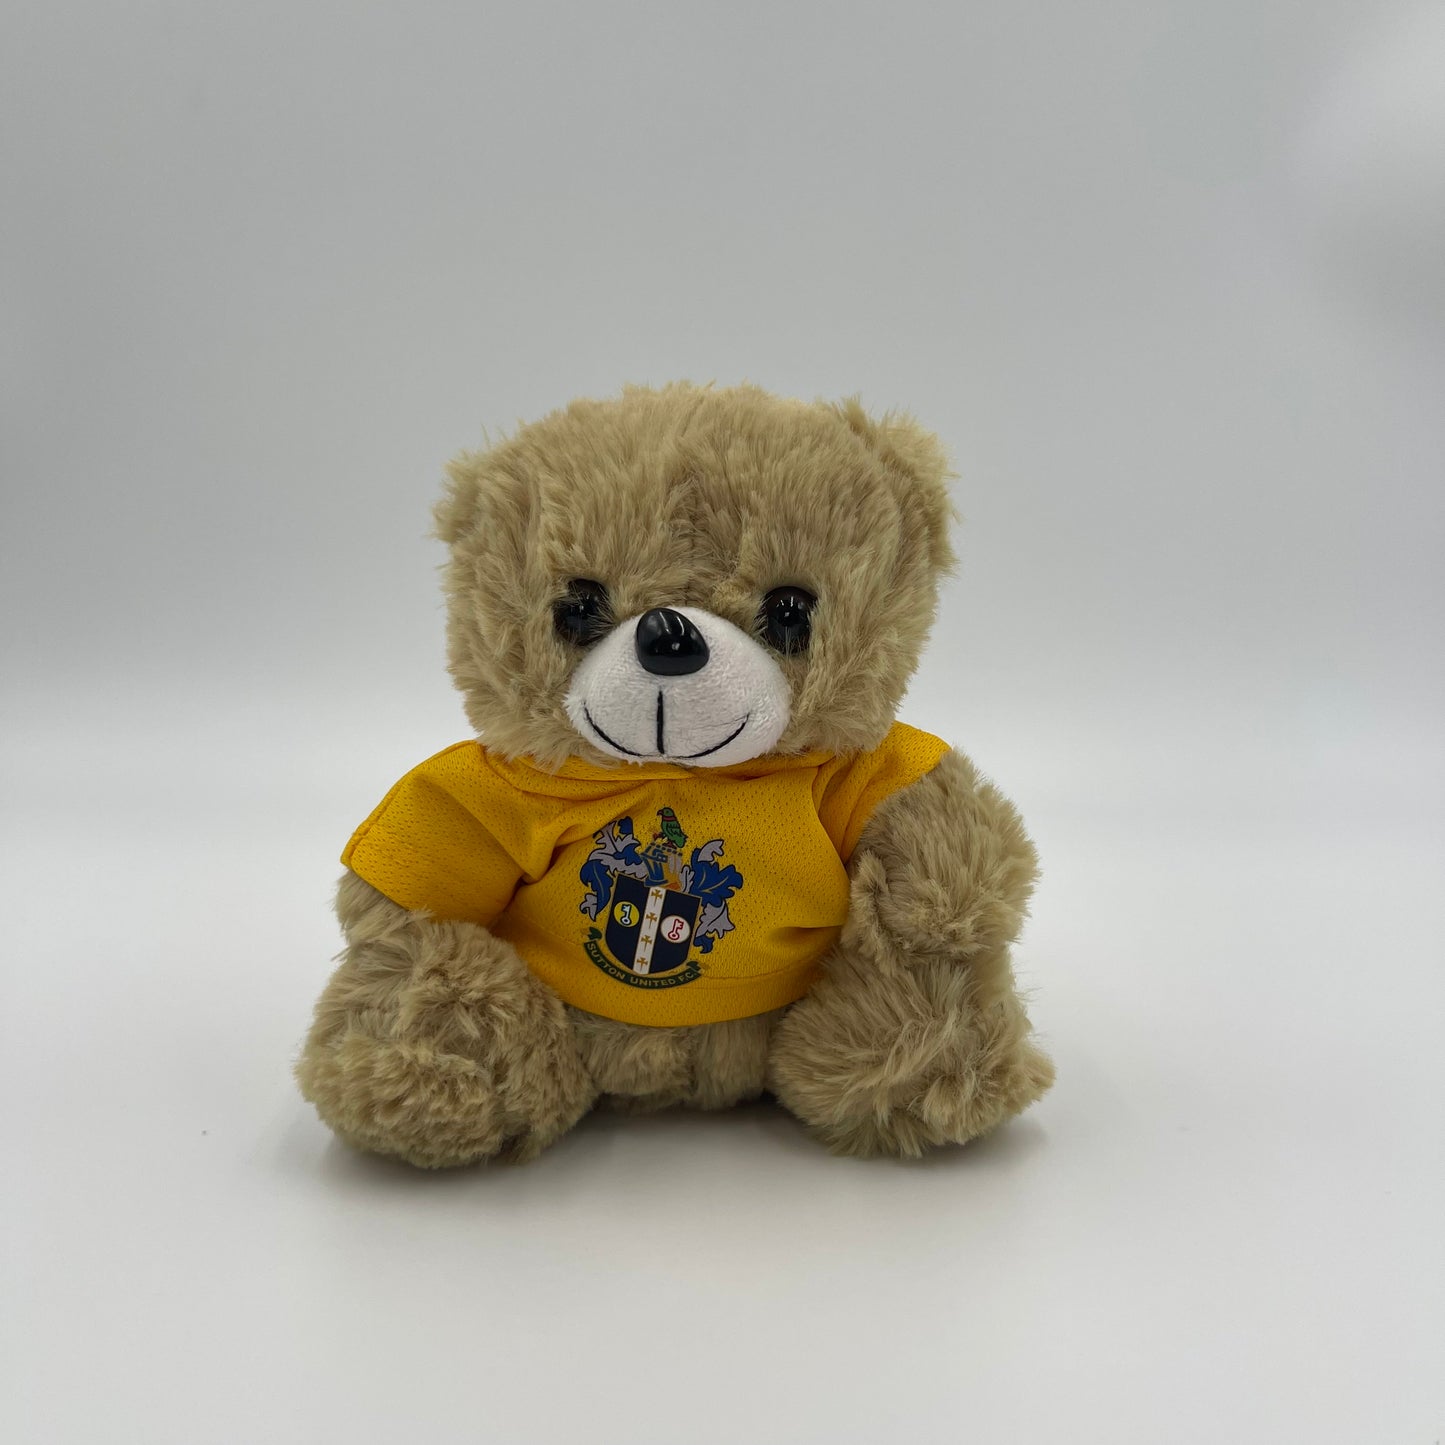 Small Light Brown Bear Plush Toy